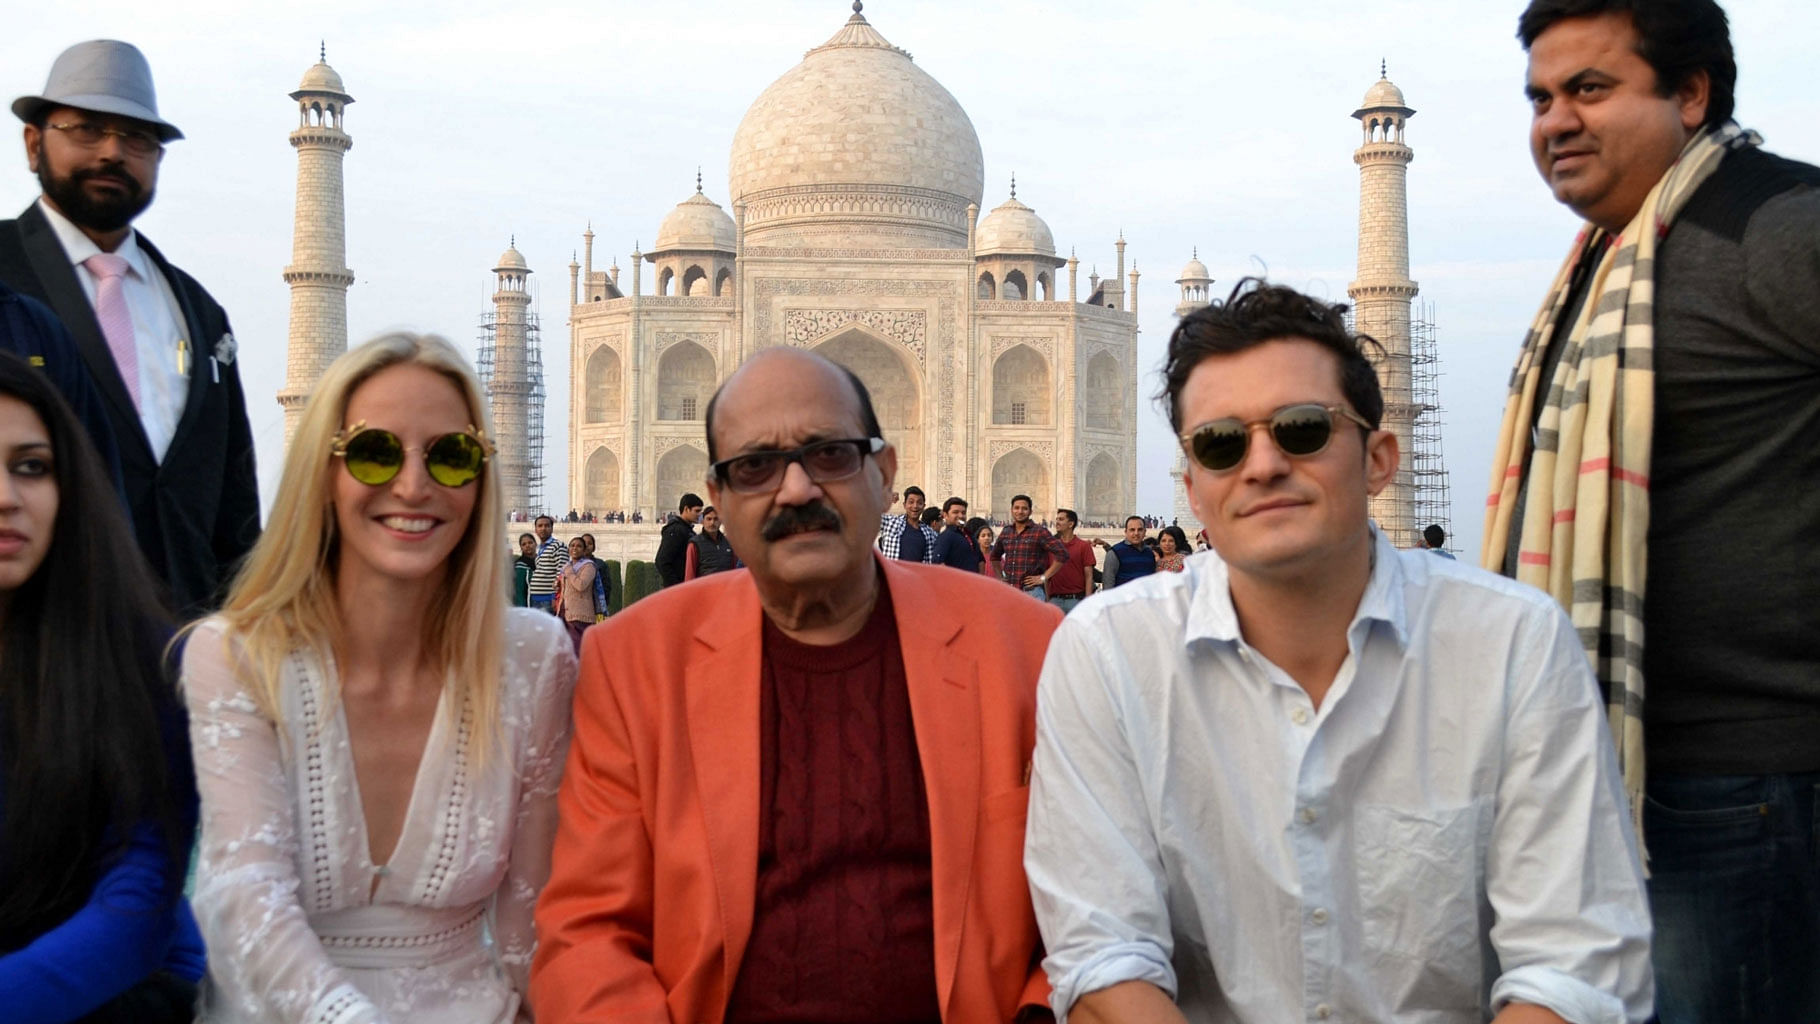 Actor Orlando Bloom with former Samajwadi Party leader Amar Singh at the Taj Mahal in Agra, on Sunday. (Photo: IANS)